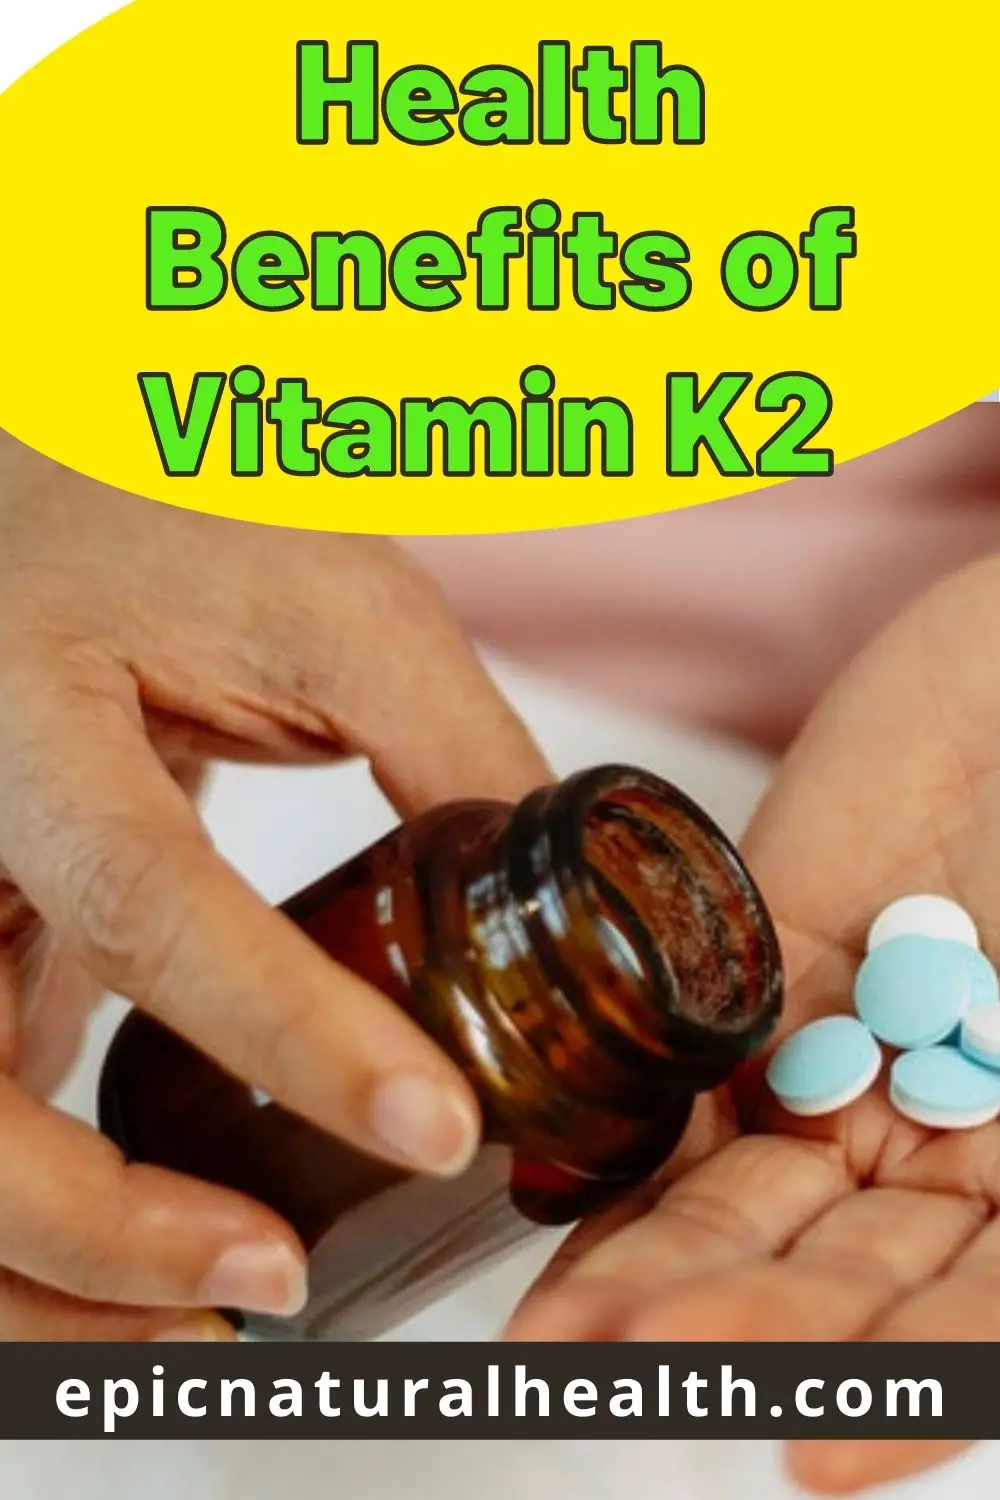 Health benefits of vitamin k2